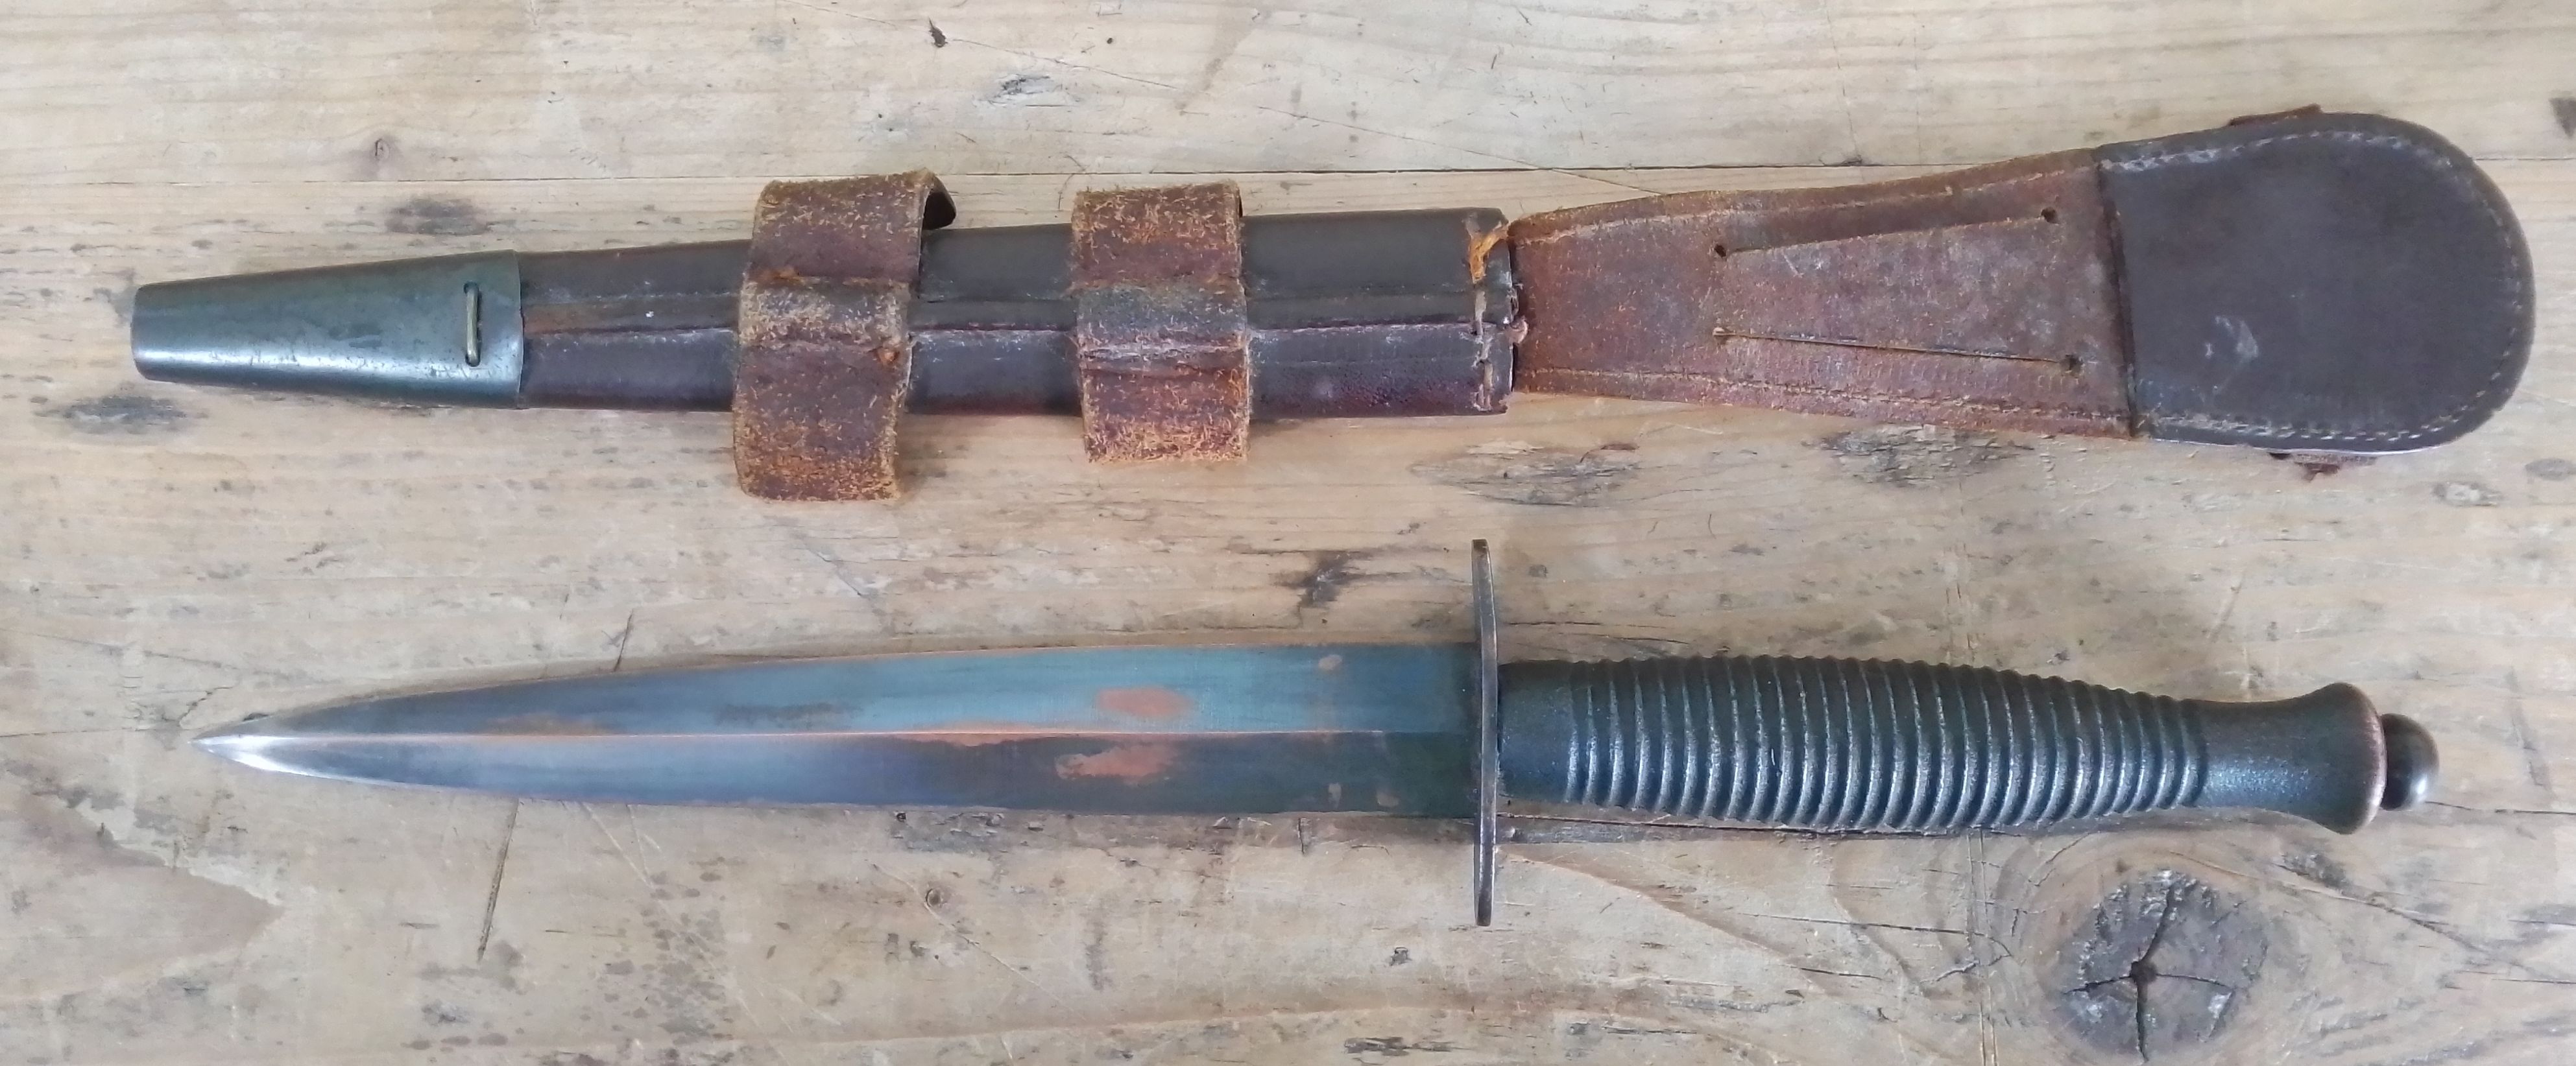 A post war Fairbairn Sykes British commando dagger and sheath. - Image 2 of 2